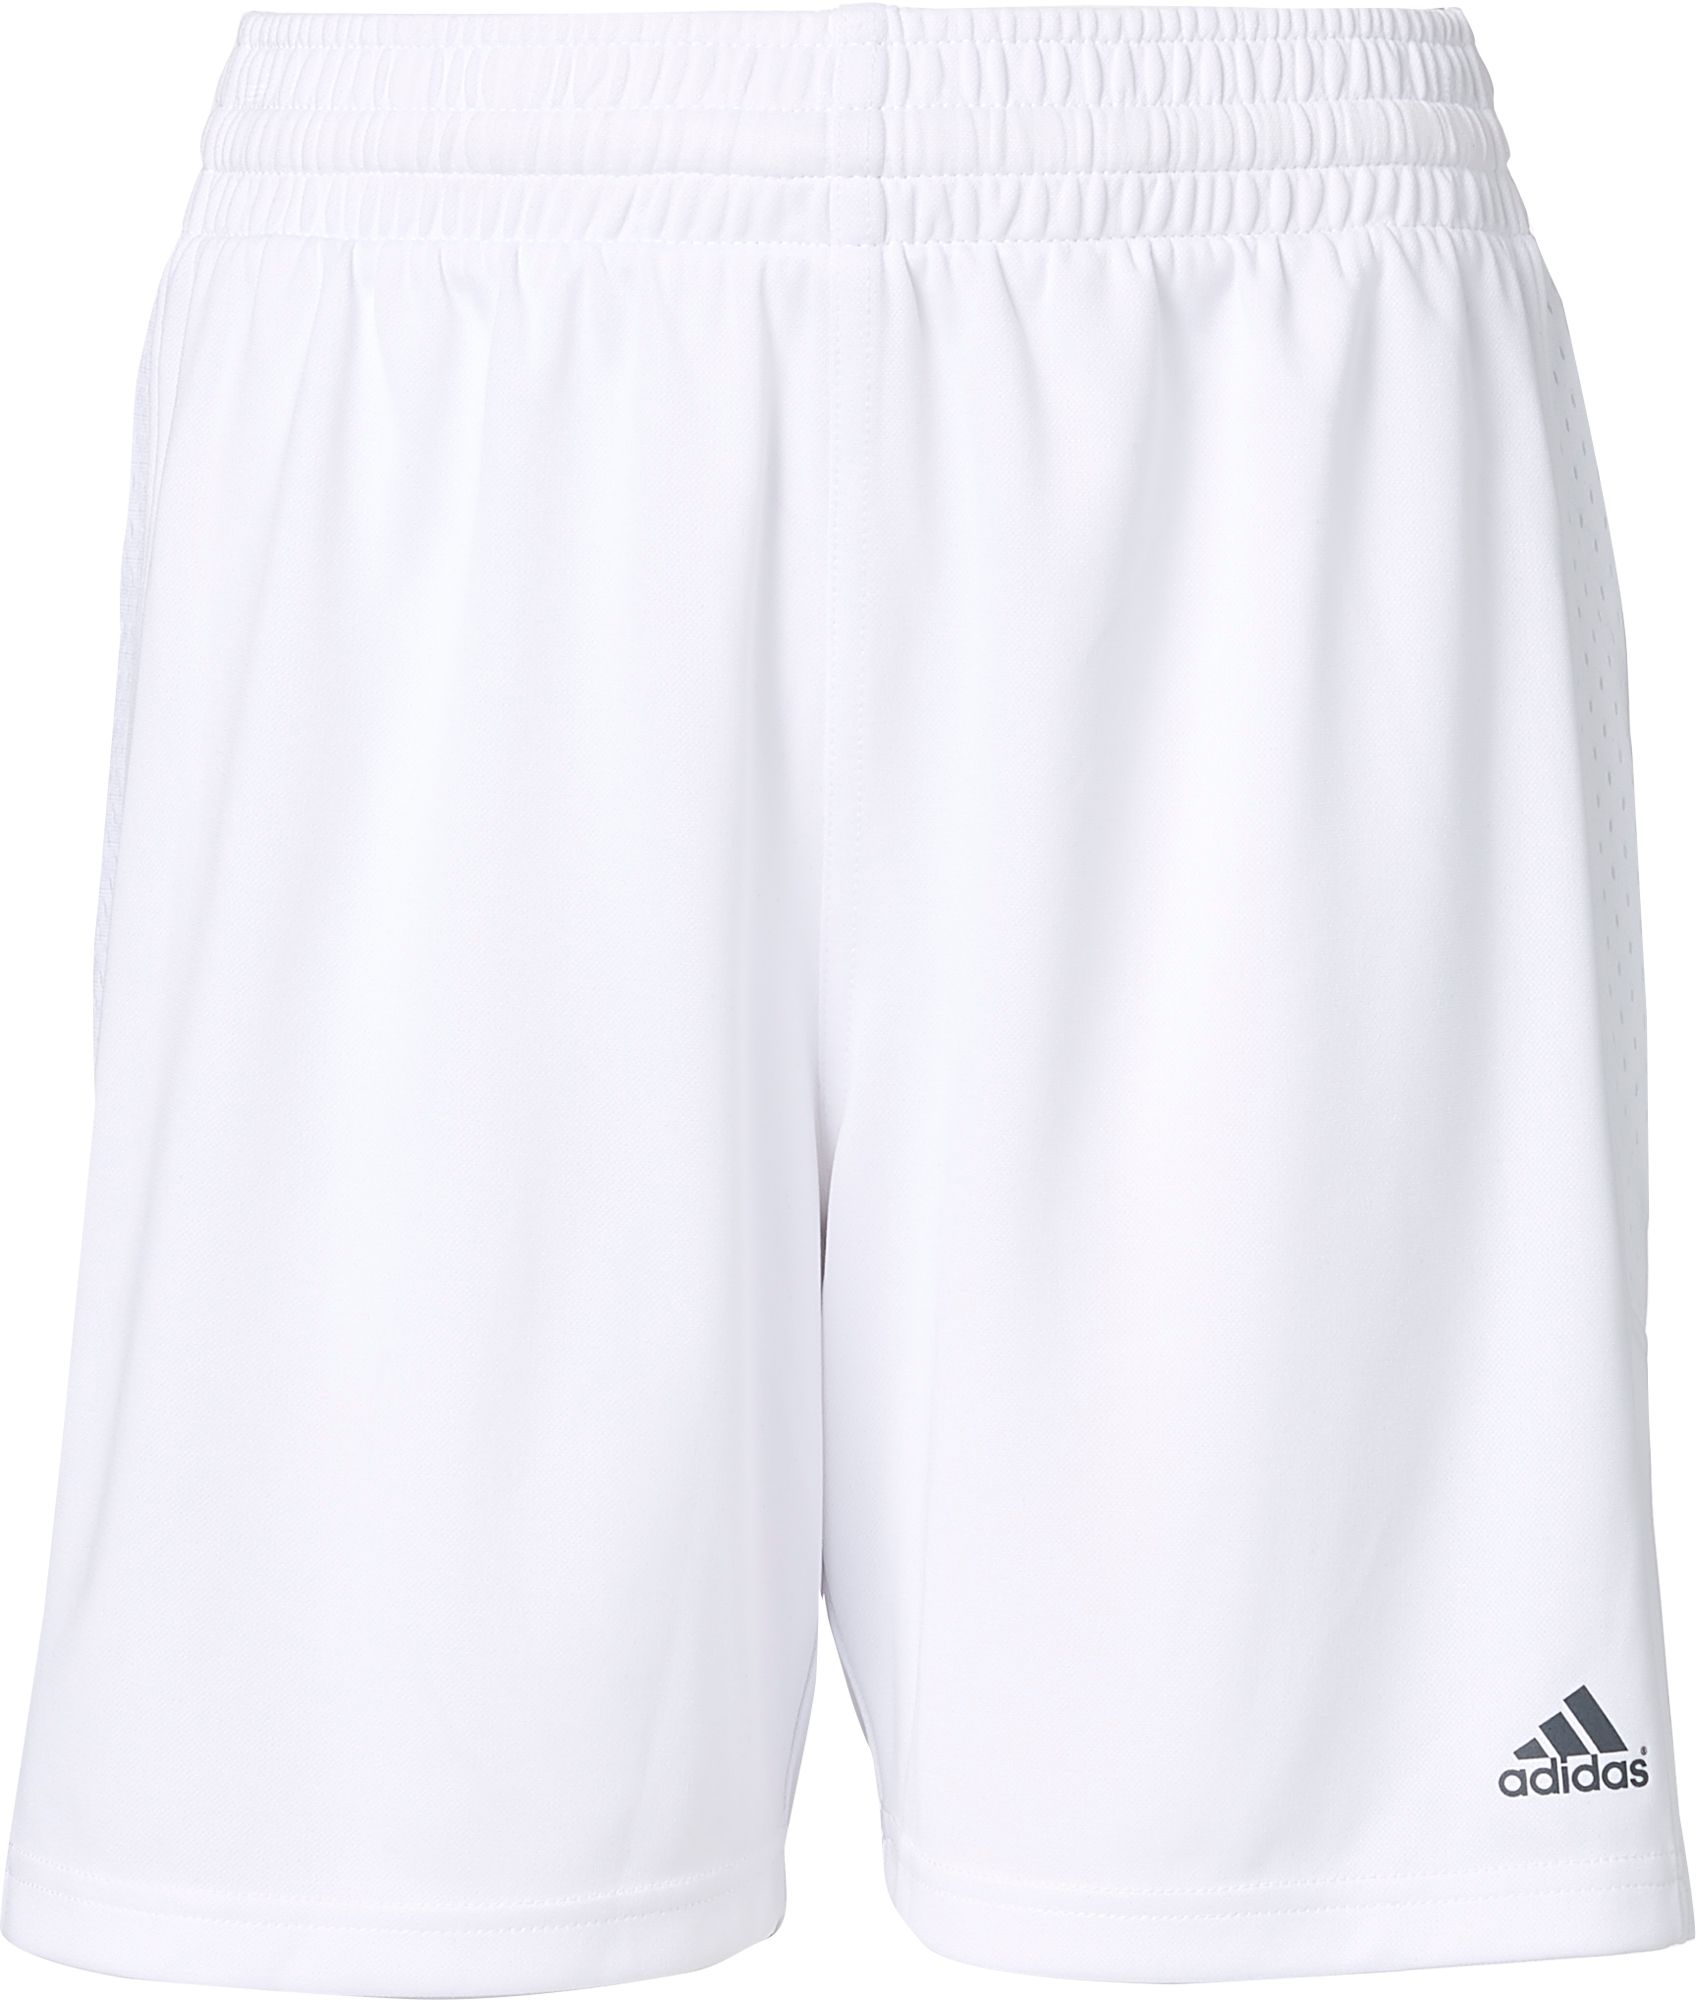 adidas white football shorts